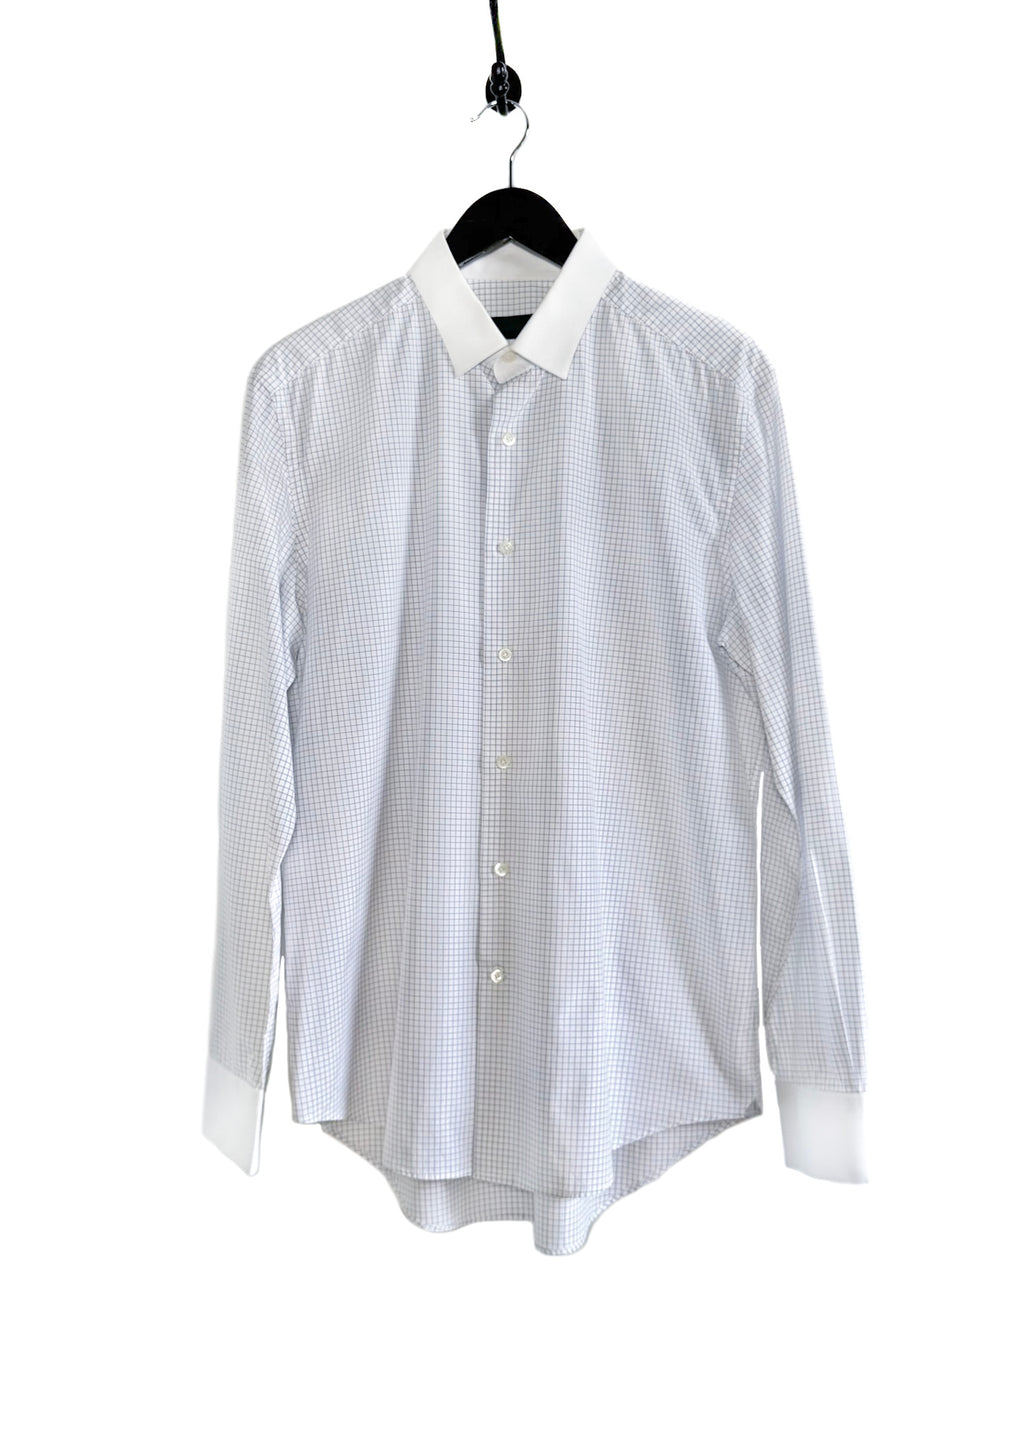 Lanvin White Checkered Shirt With White Collar